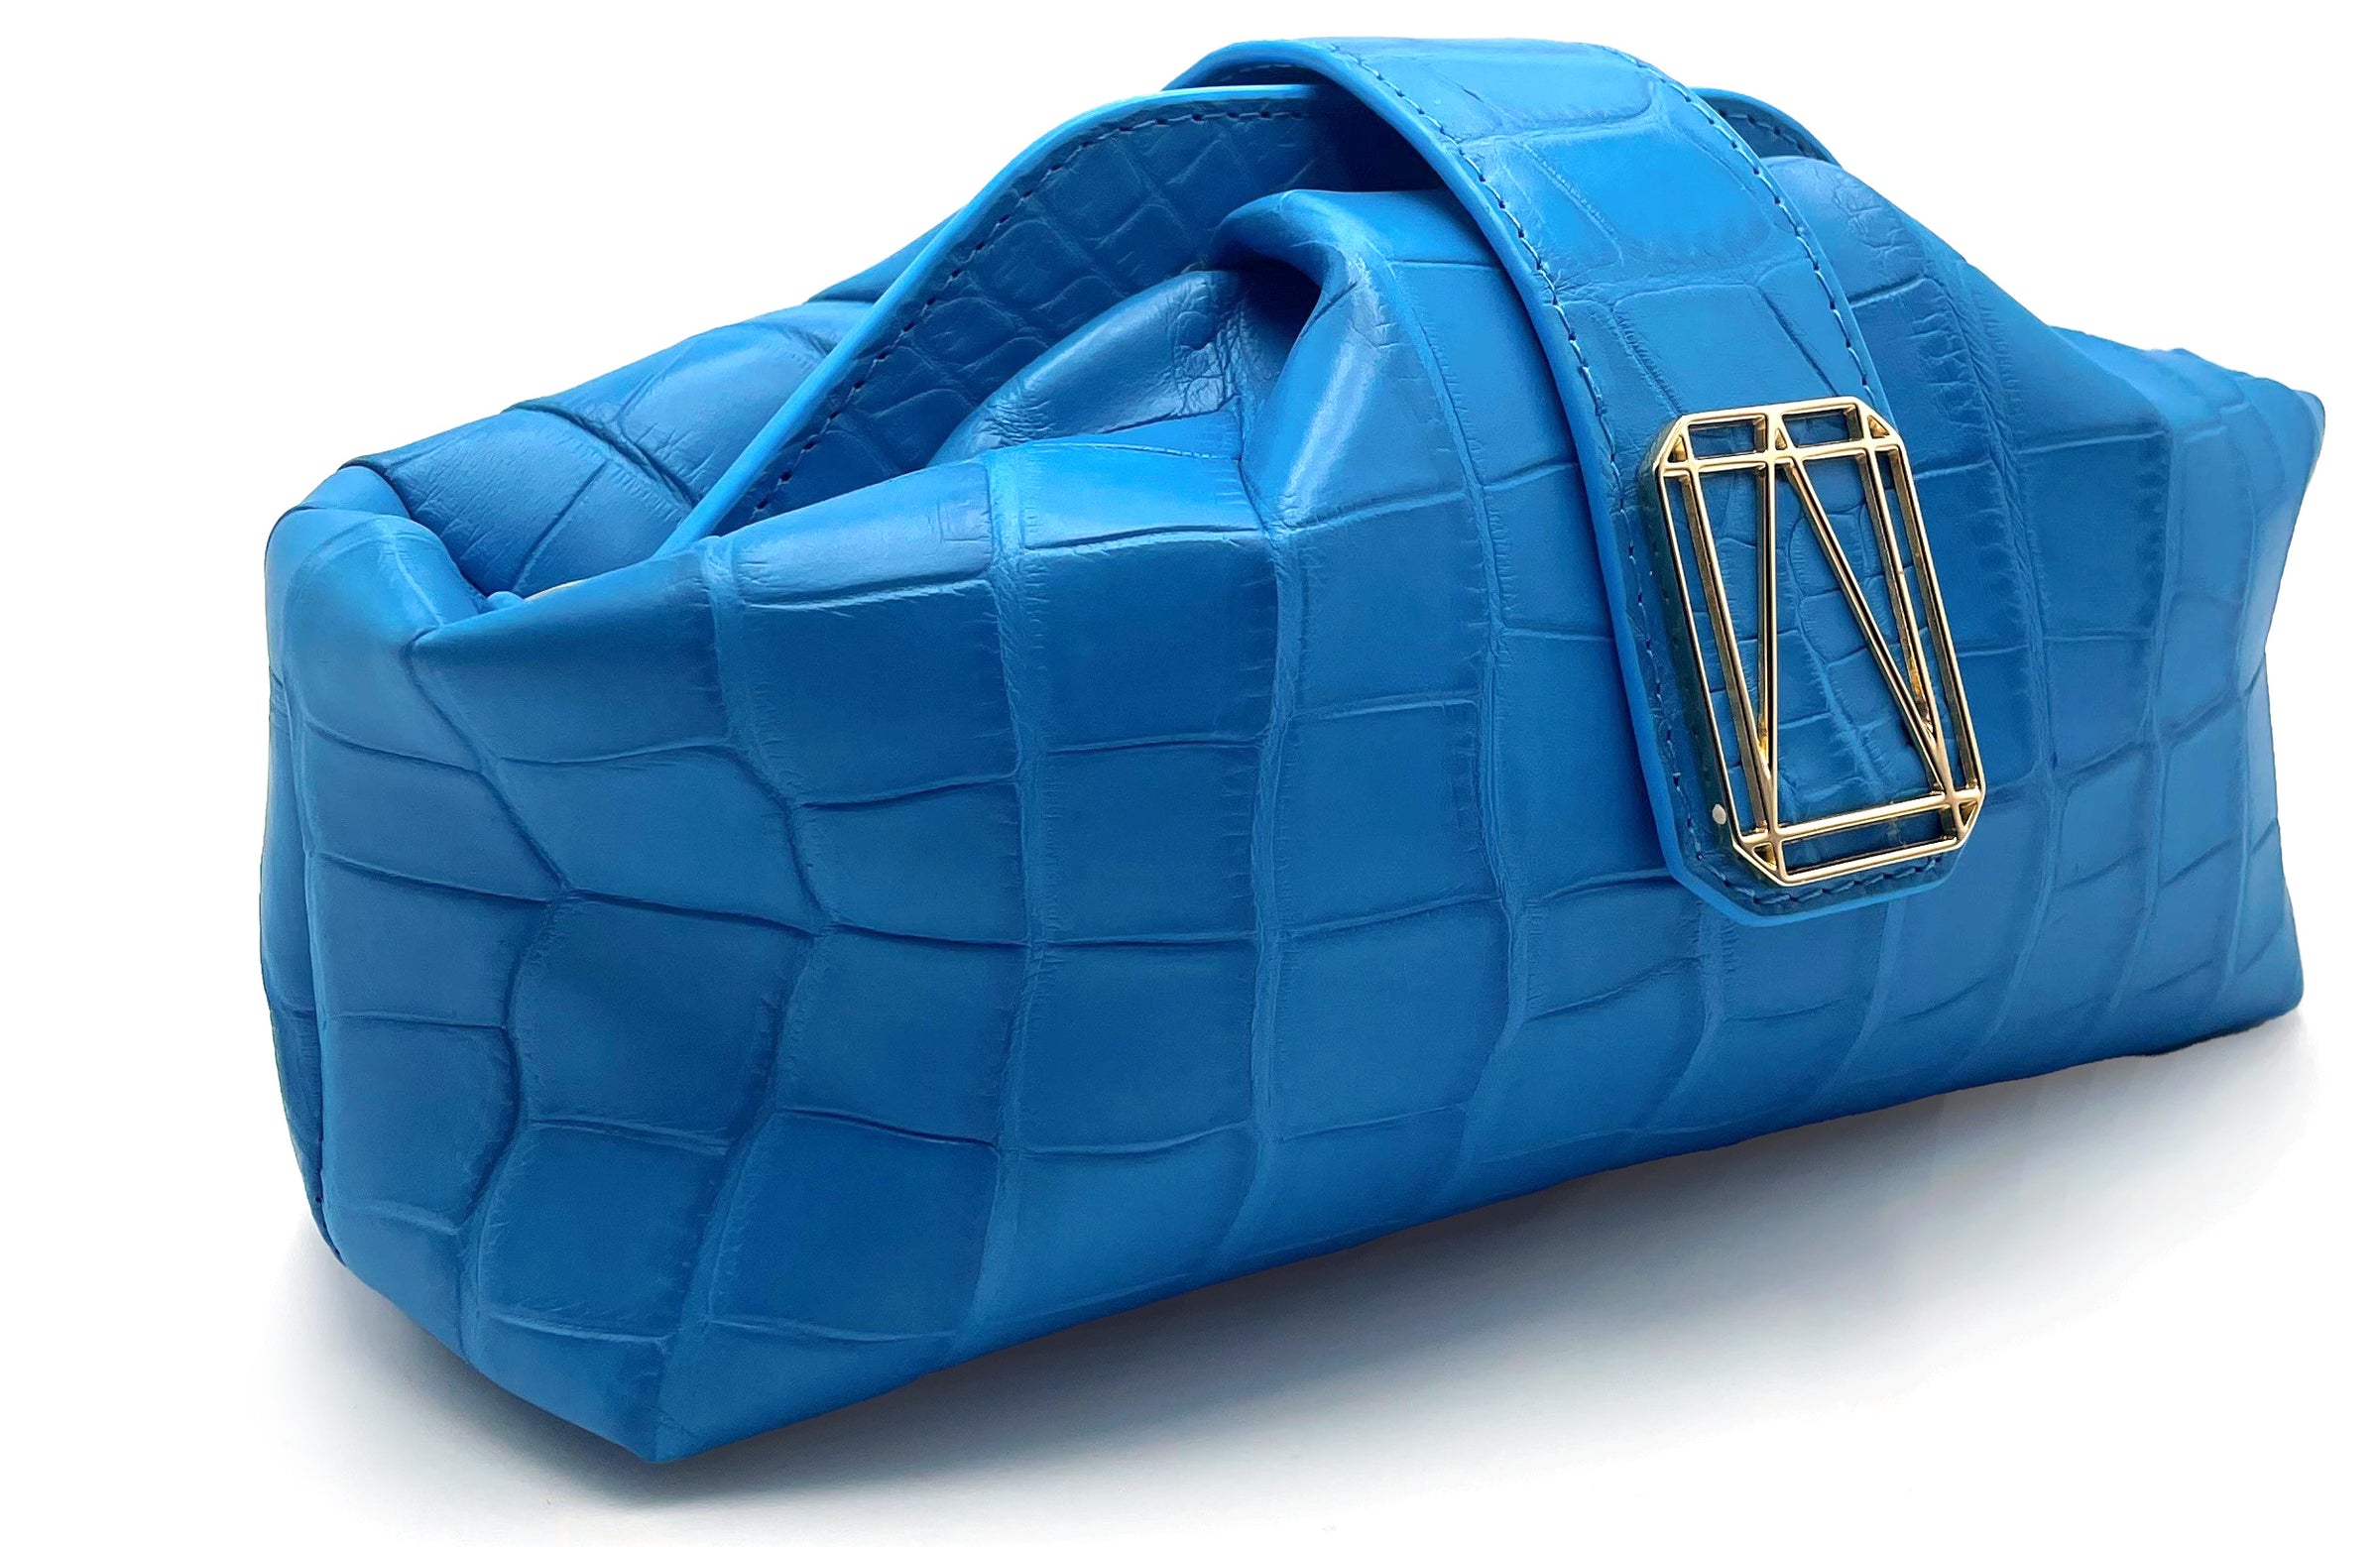 Azzaia Marie Antoinette luxury crocodile handbag